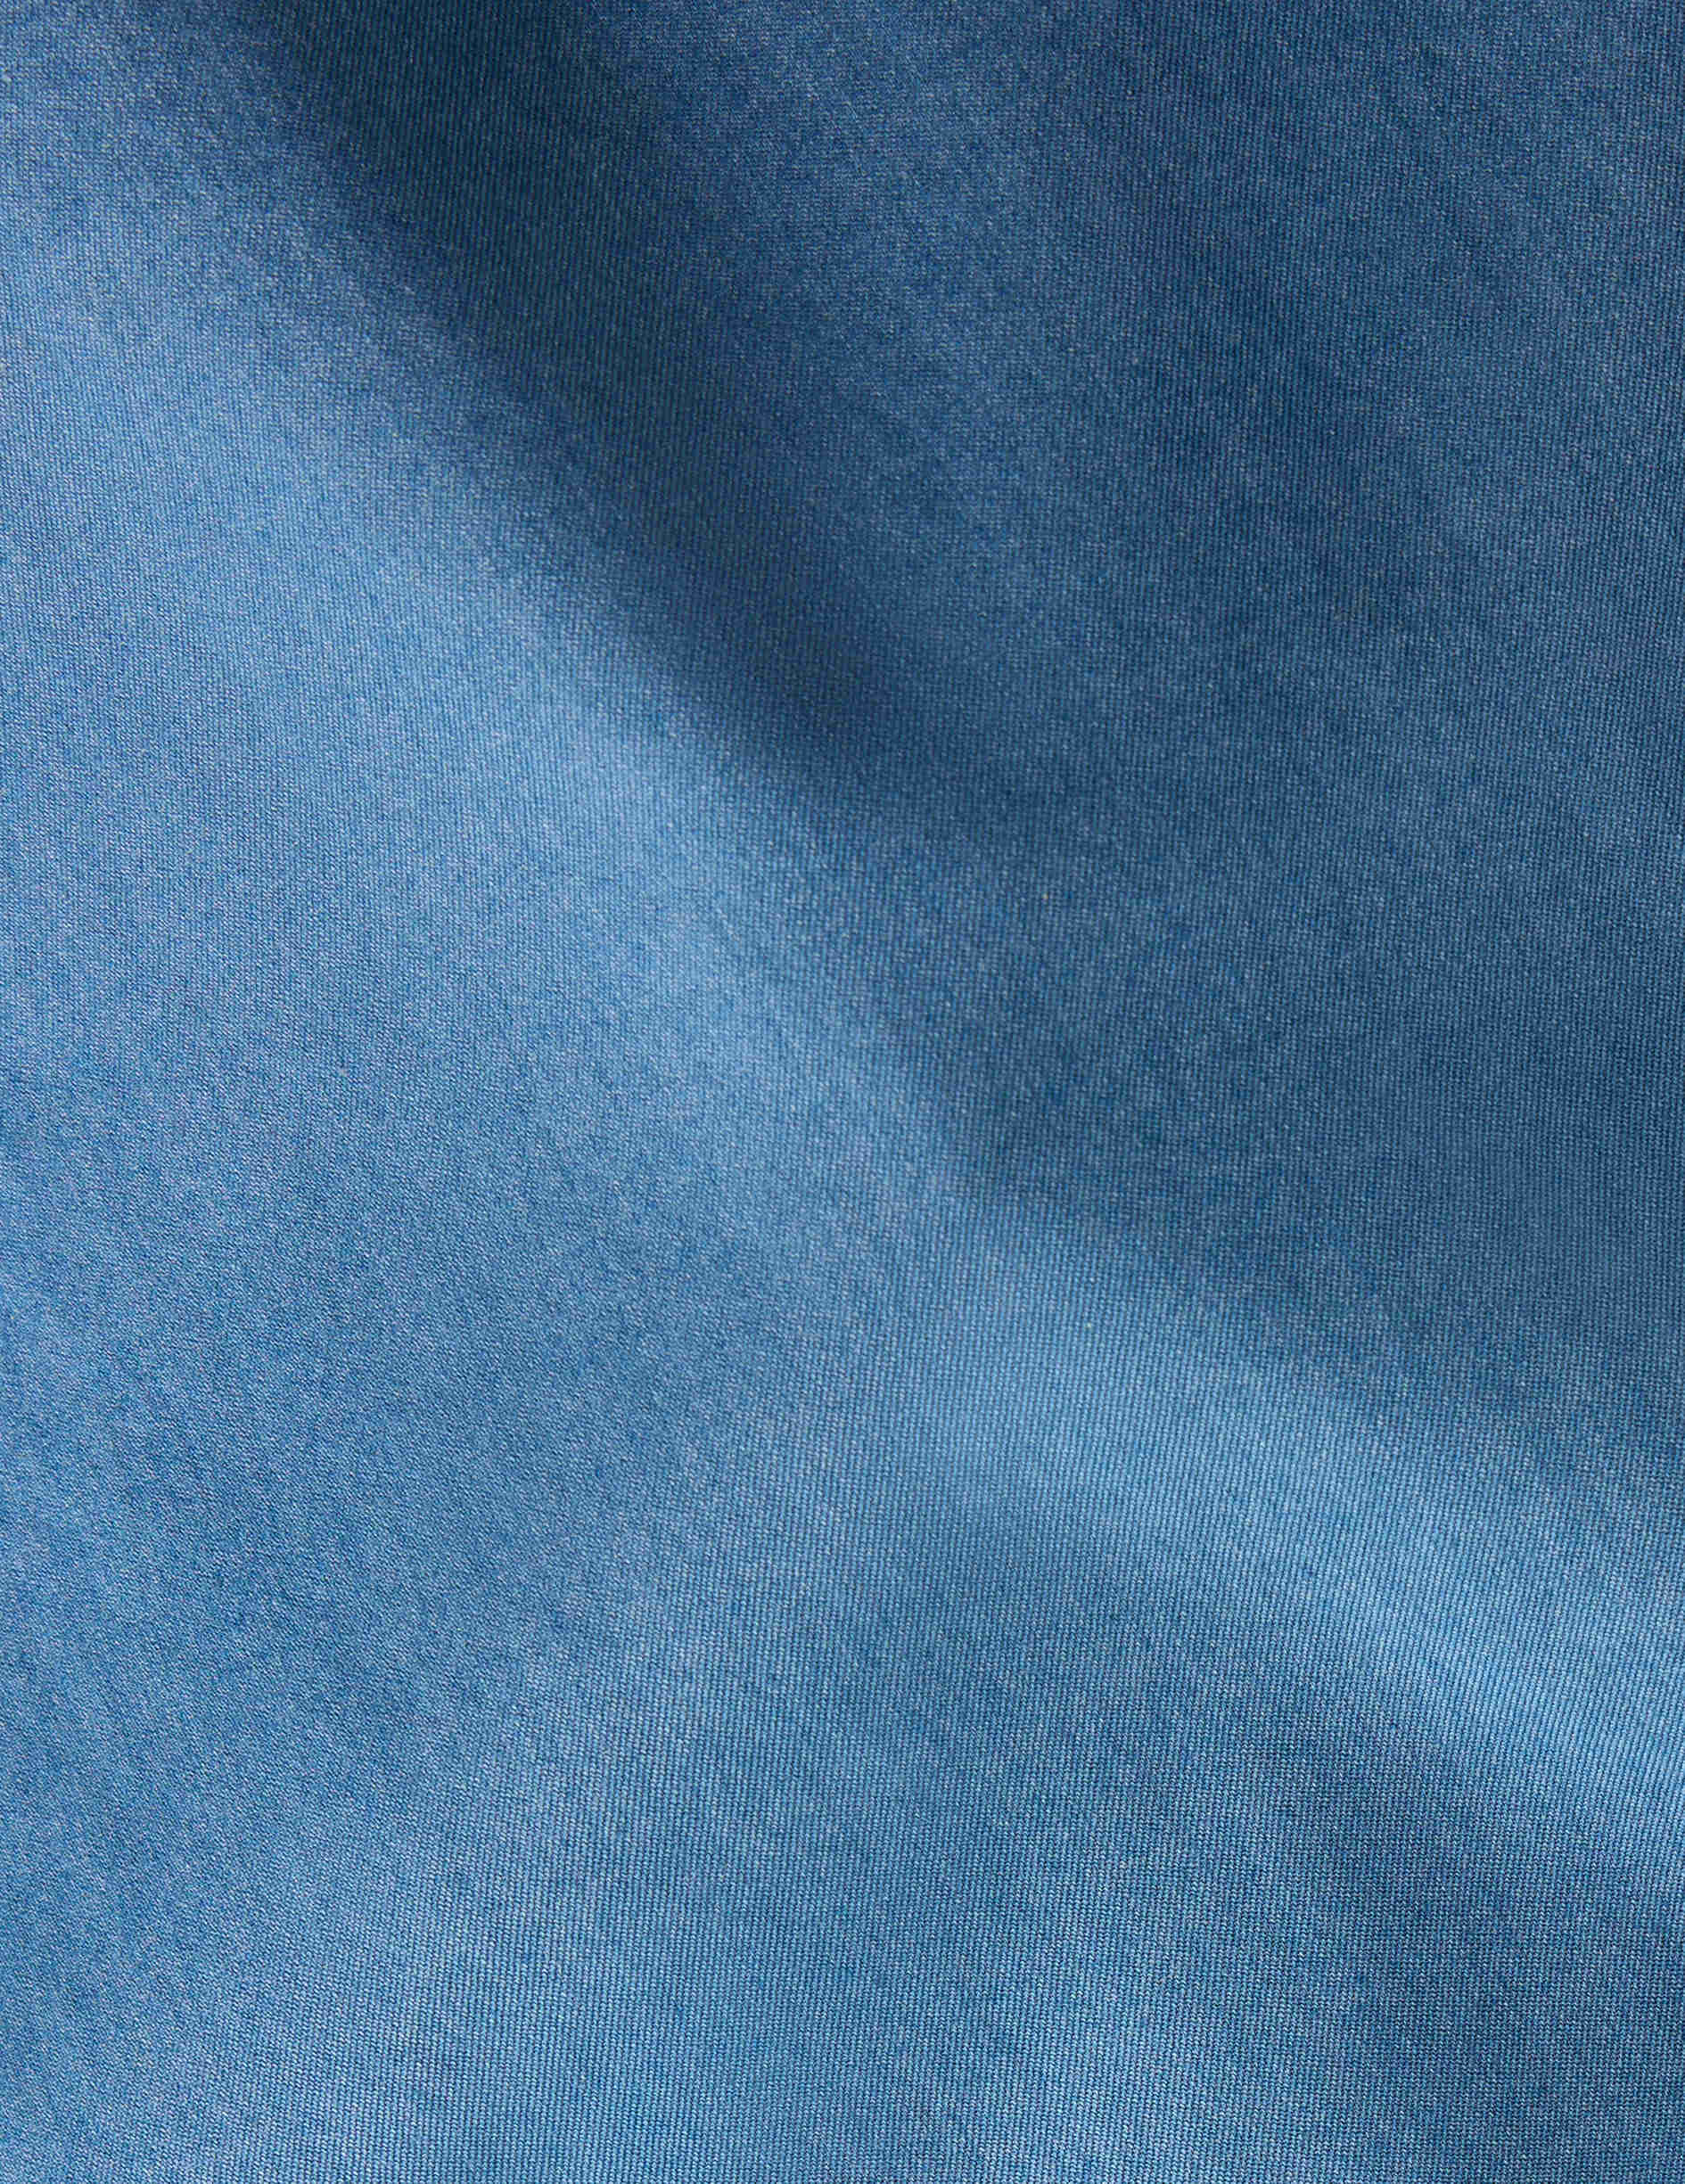 Chemise Semi-ajustée bleue - Twill - Col Américain